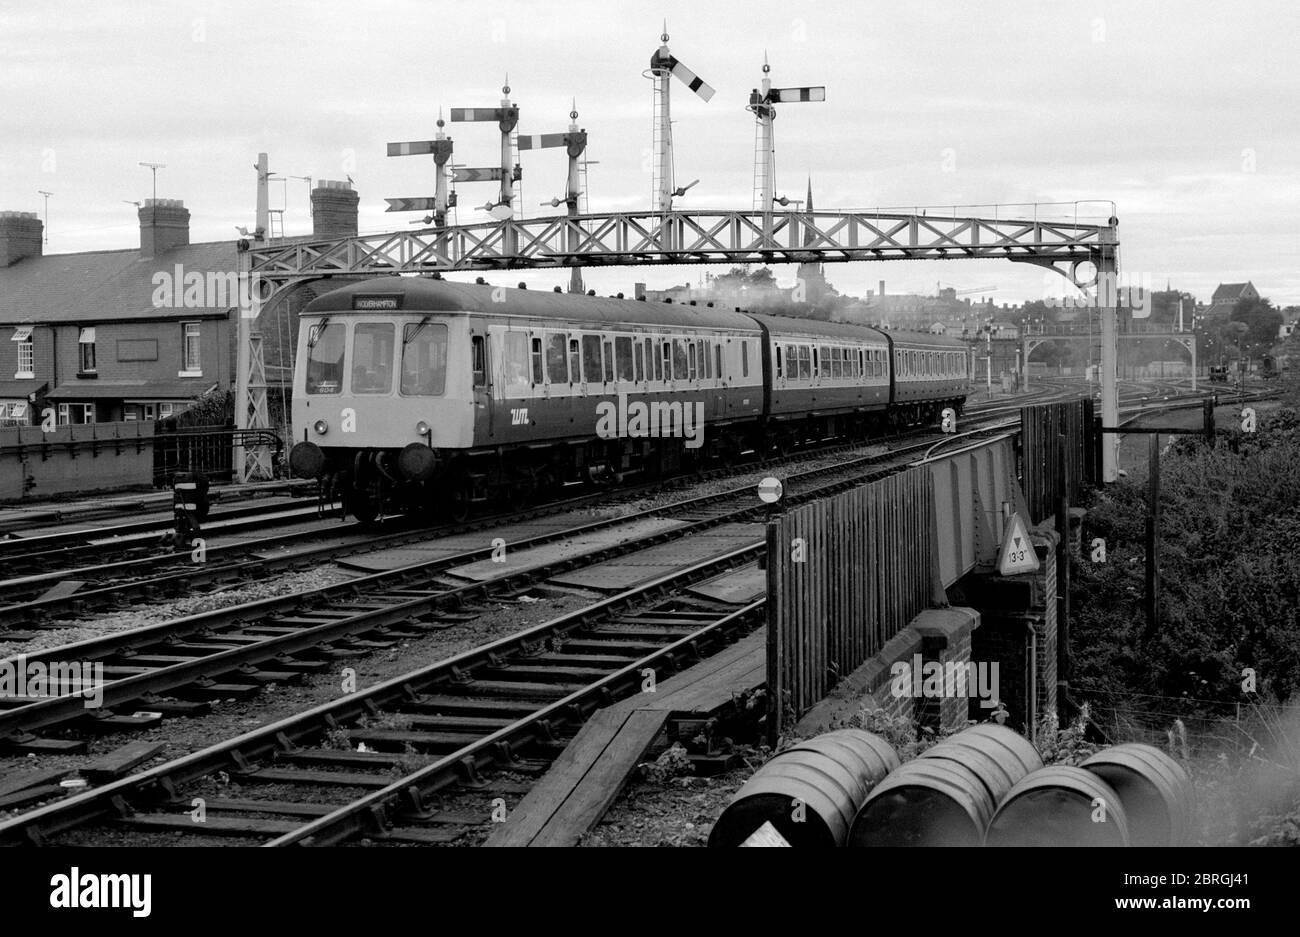 A 3-car diesel multiple unit train passes the signal gantry at Shrewsbury, England, UK. 27th September 1986. Stock Photo